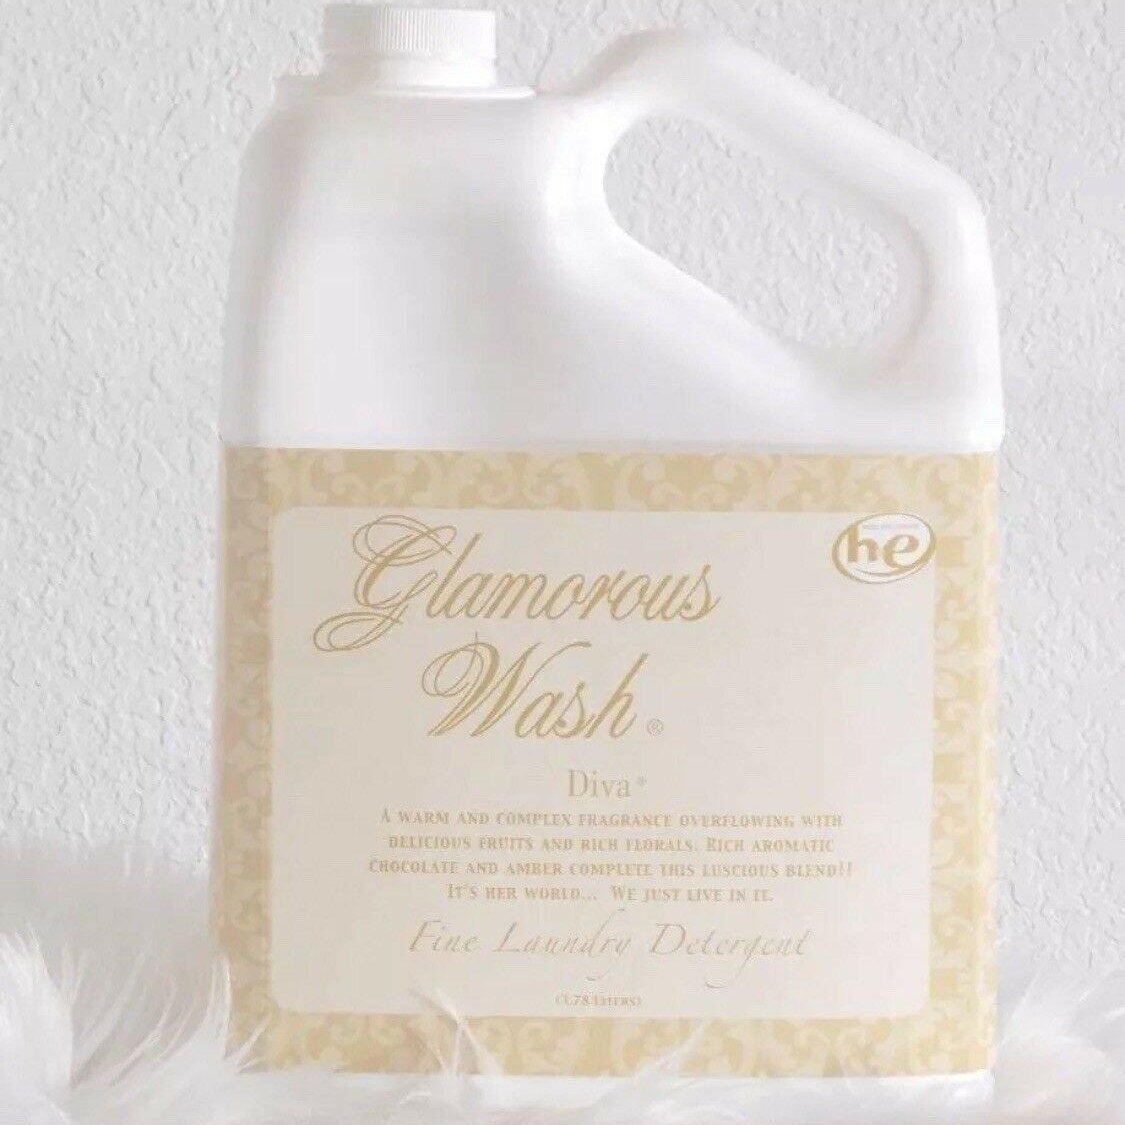 Glamorous Wash 1.89L - Diva